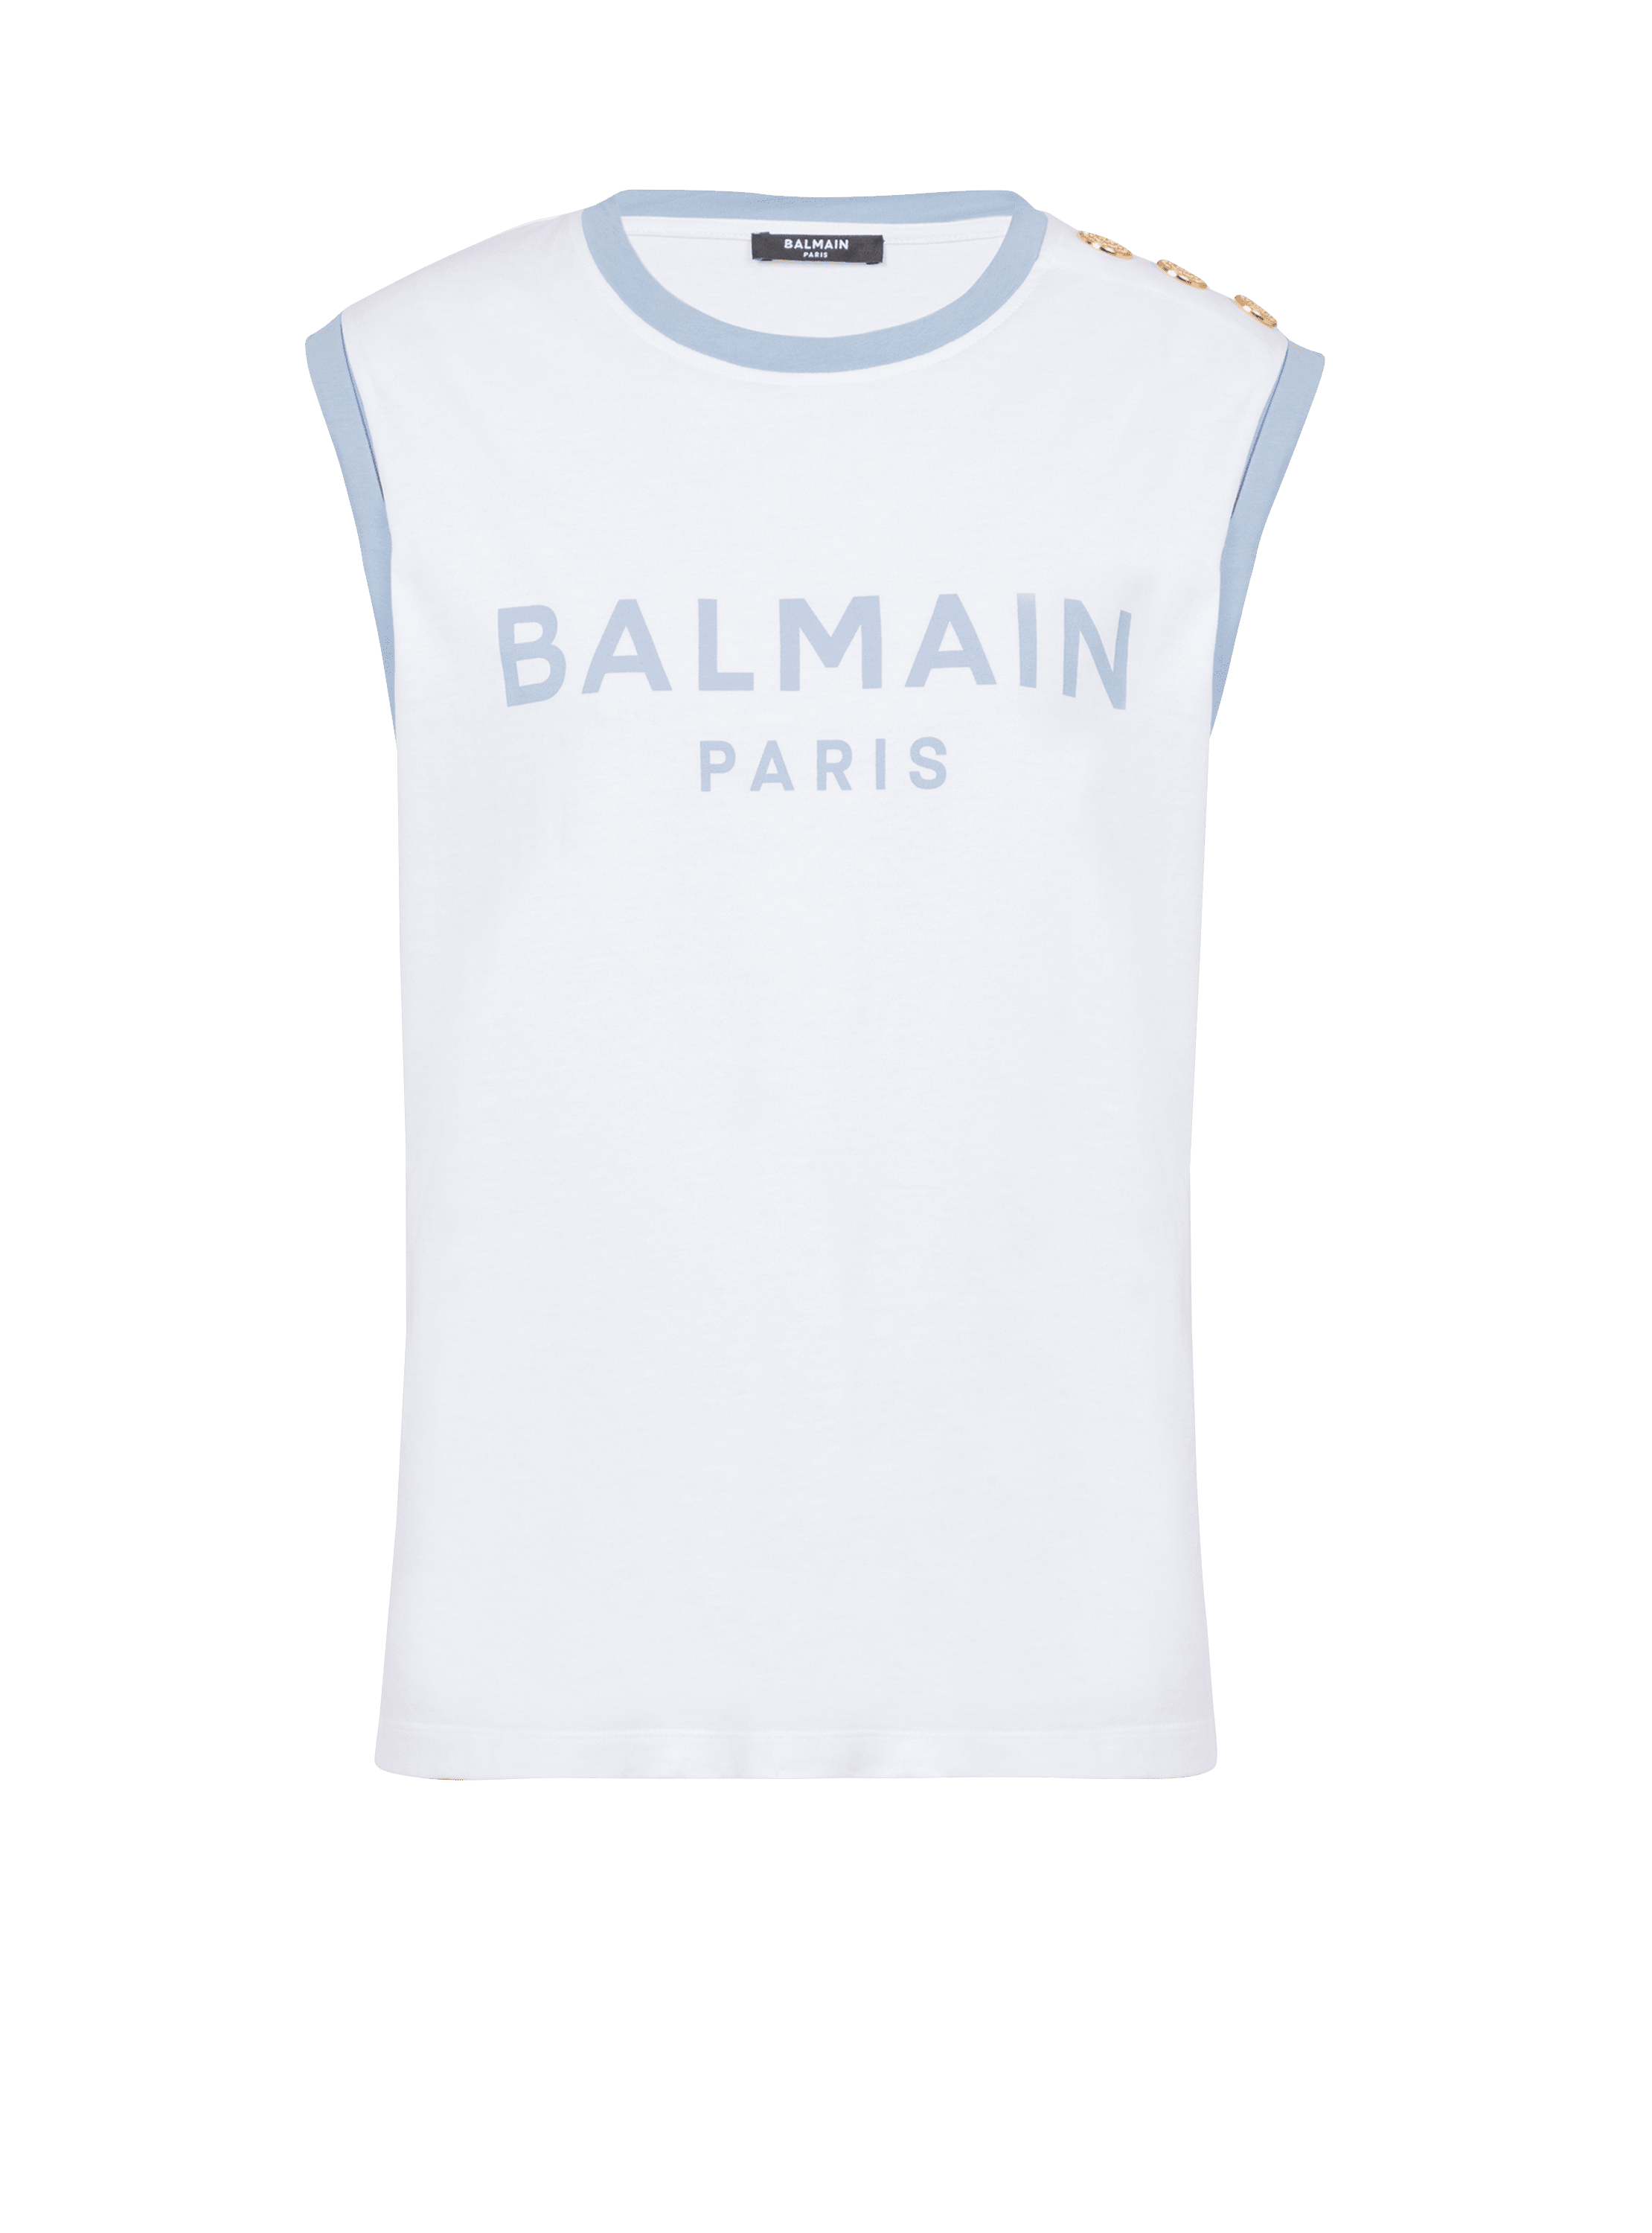 Balmain Paris 3-button tank top blue - Women | BALMAIN